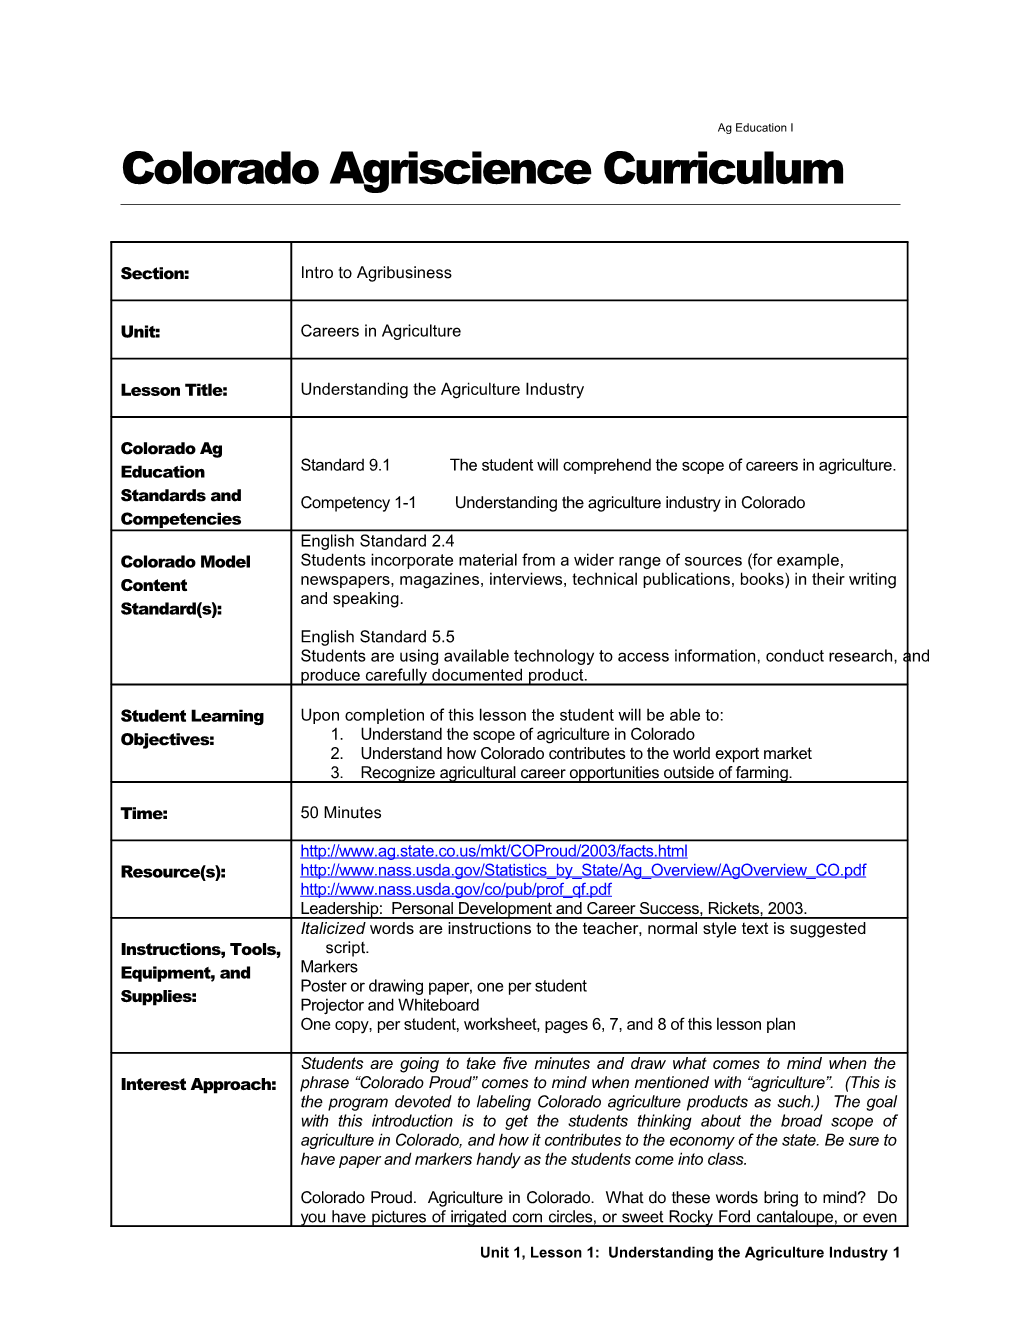 Colorado Agriscience Curriculum s2